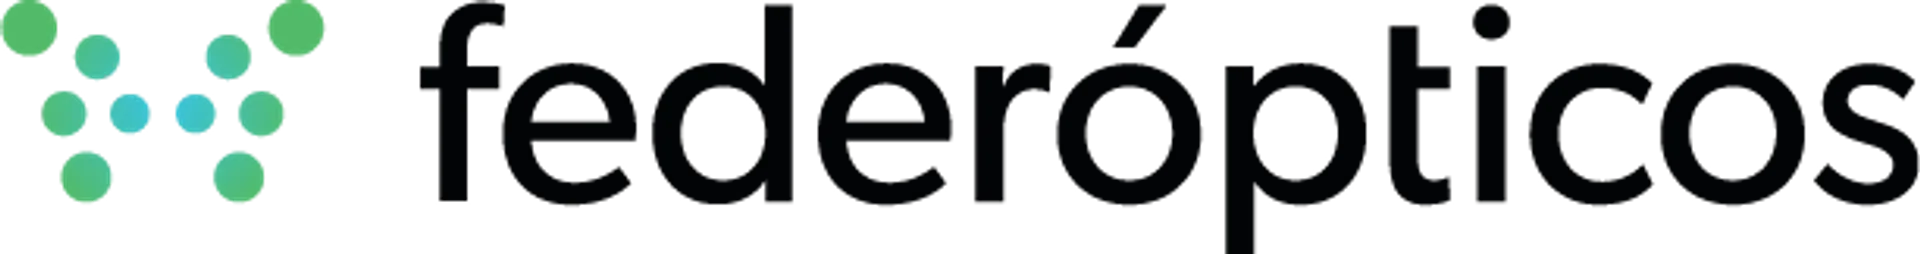 FEDEROPTICOS logo